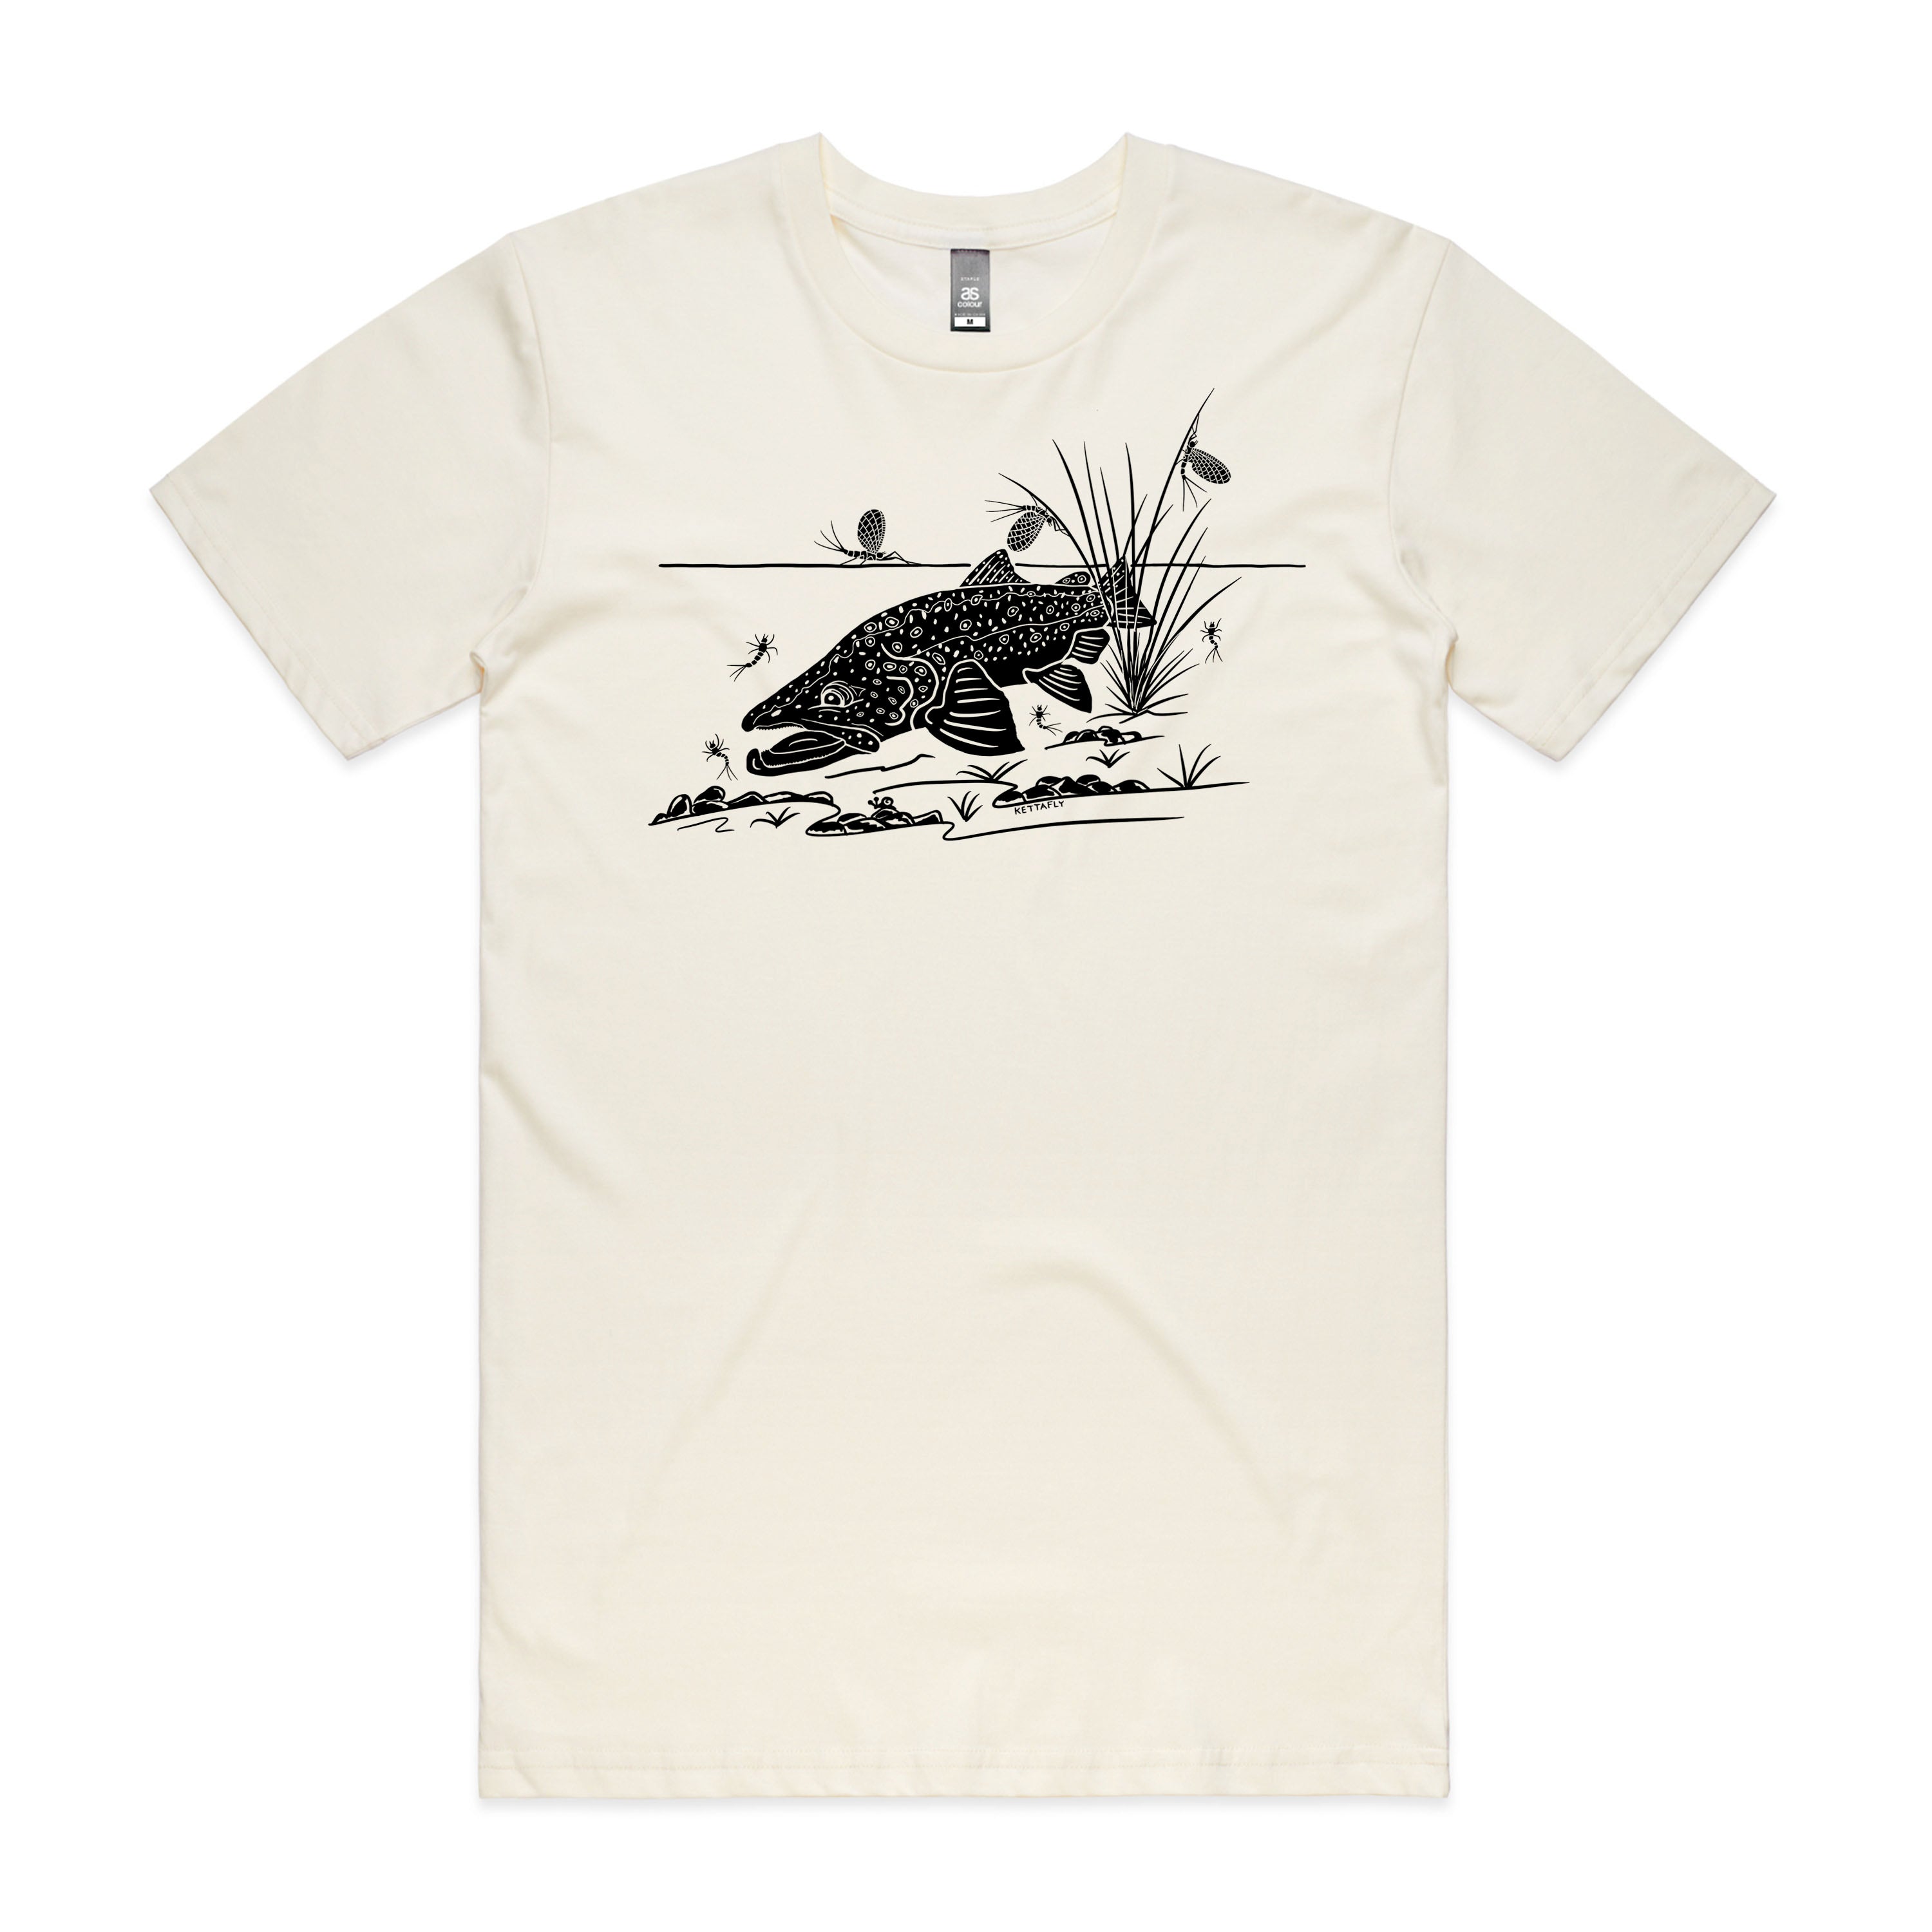 Brown Trout & Duns Design (front) T-Shirt Short Sleeve